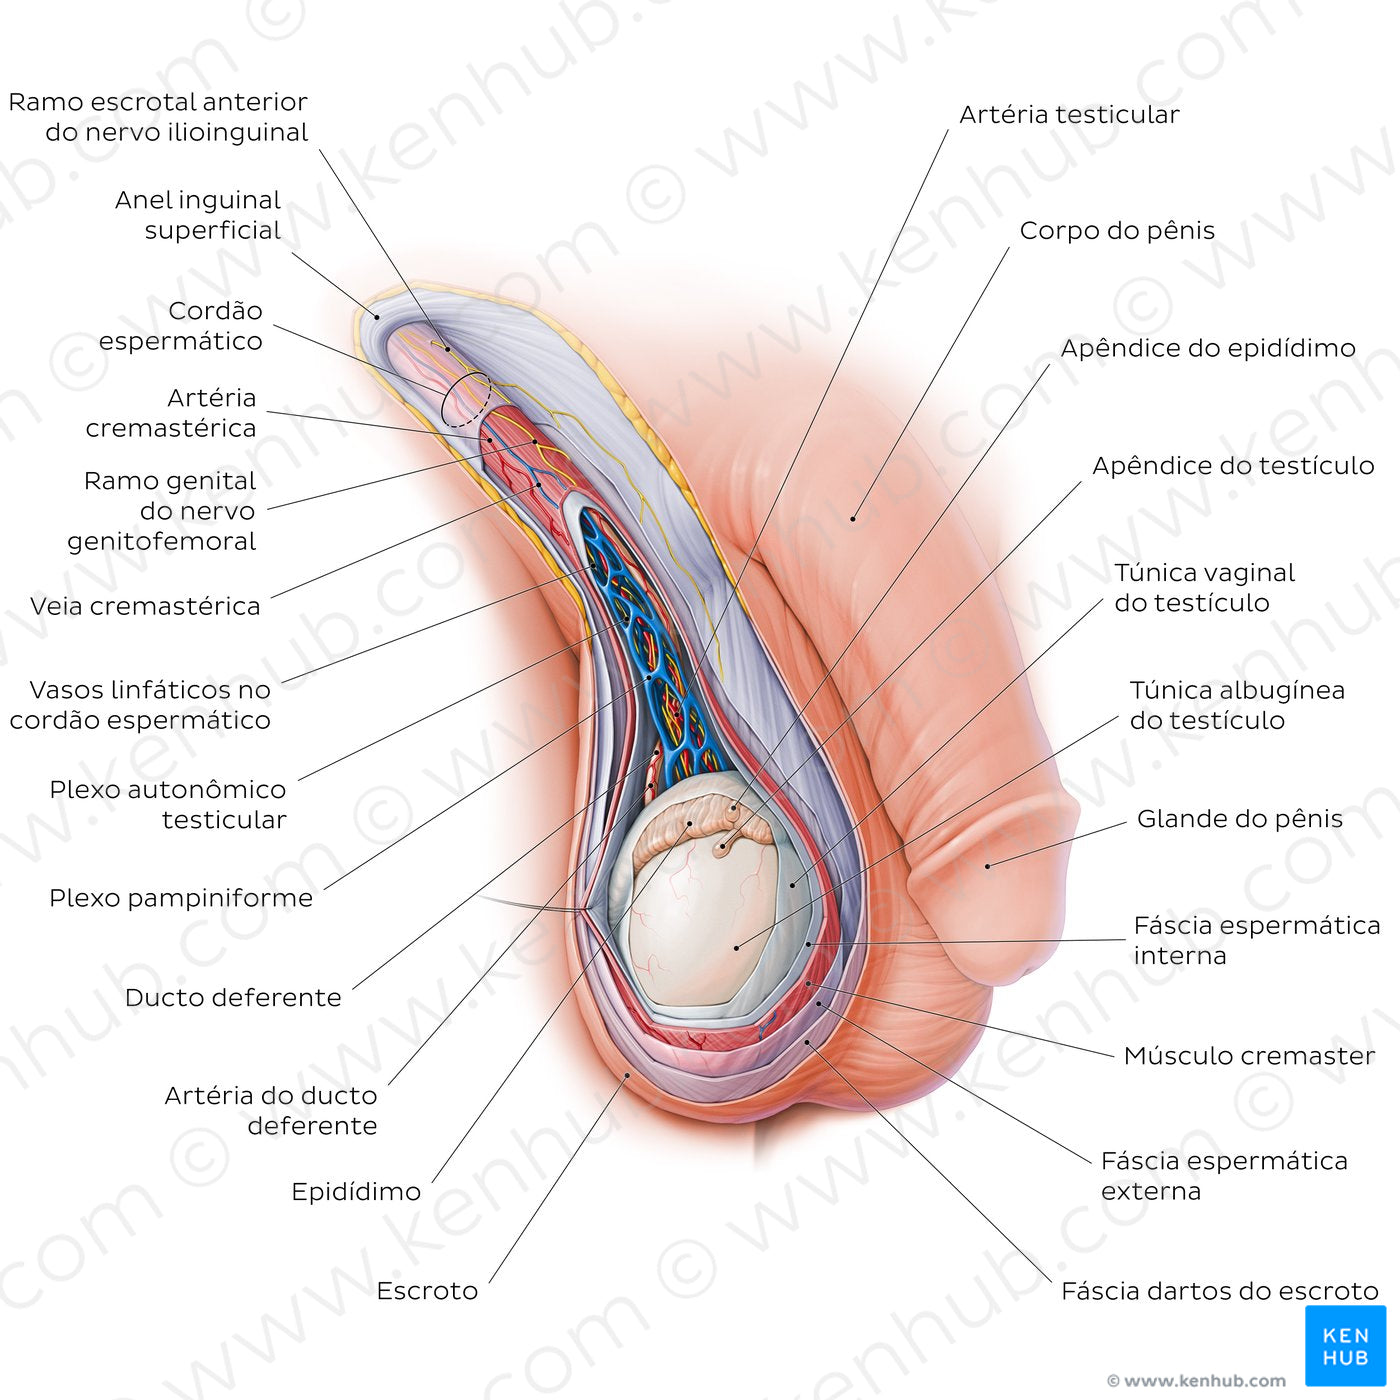 Scrotum and spermatic cord (Portuguese)